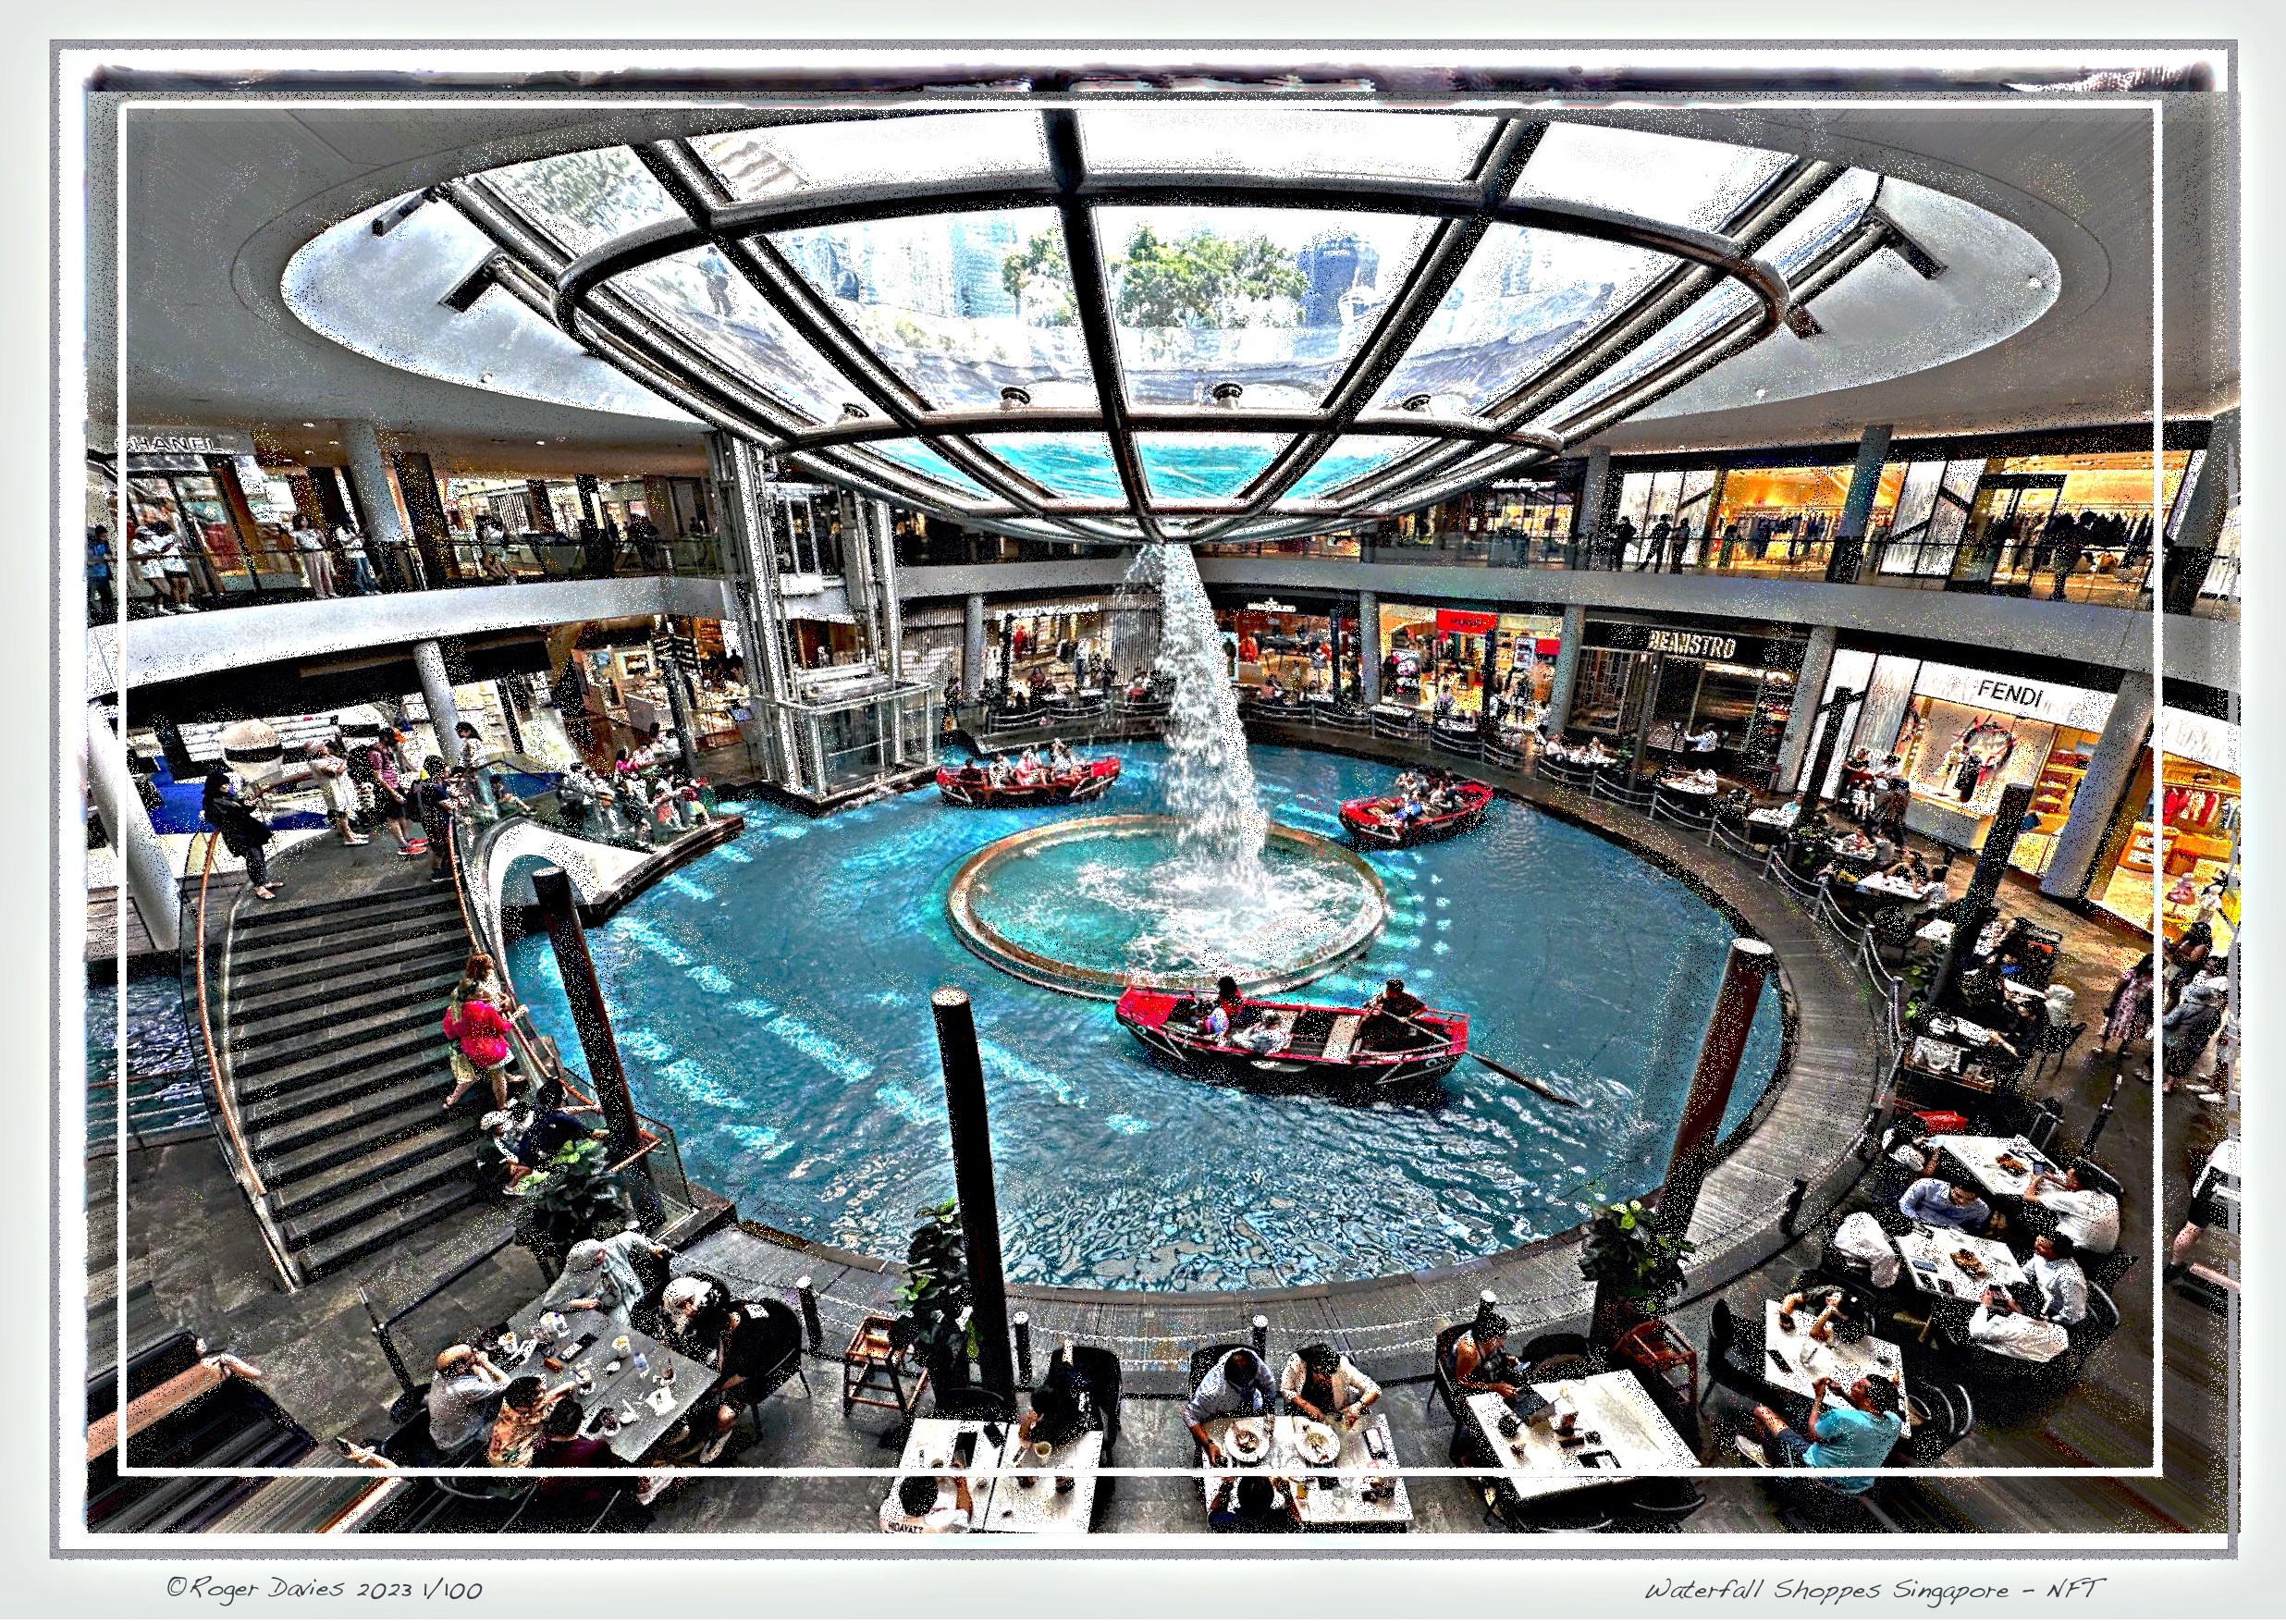 Waterfall Shoppes Singapore - NFT